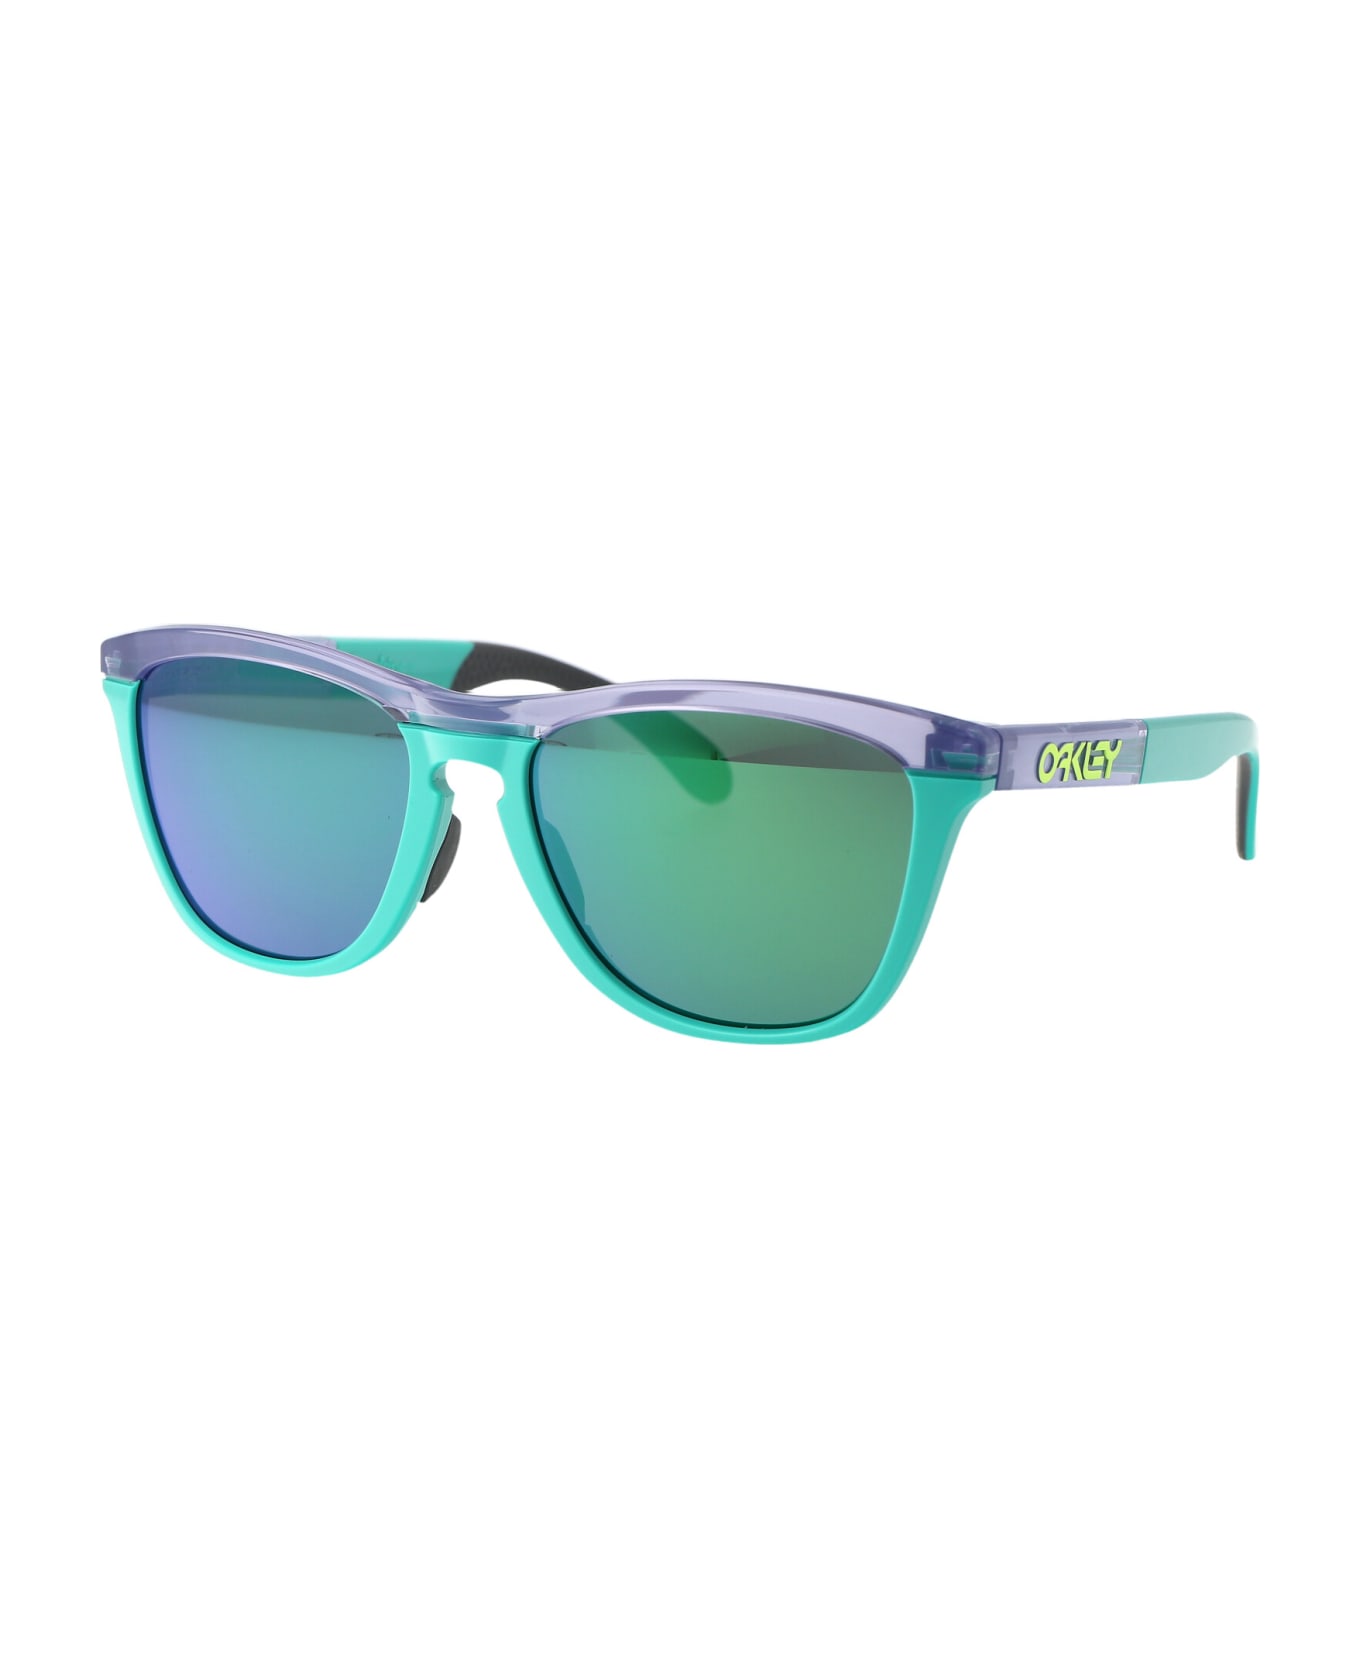 Oakley Frogskins Range Sunglasses - Turquoise サングラス